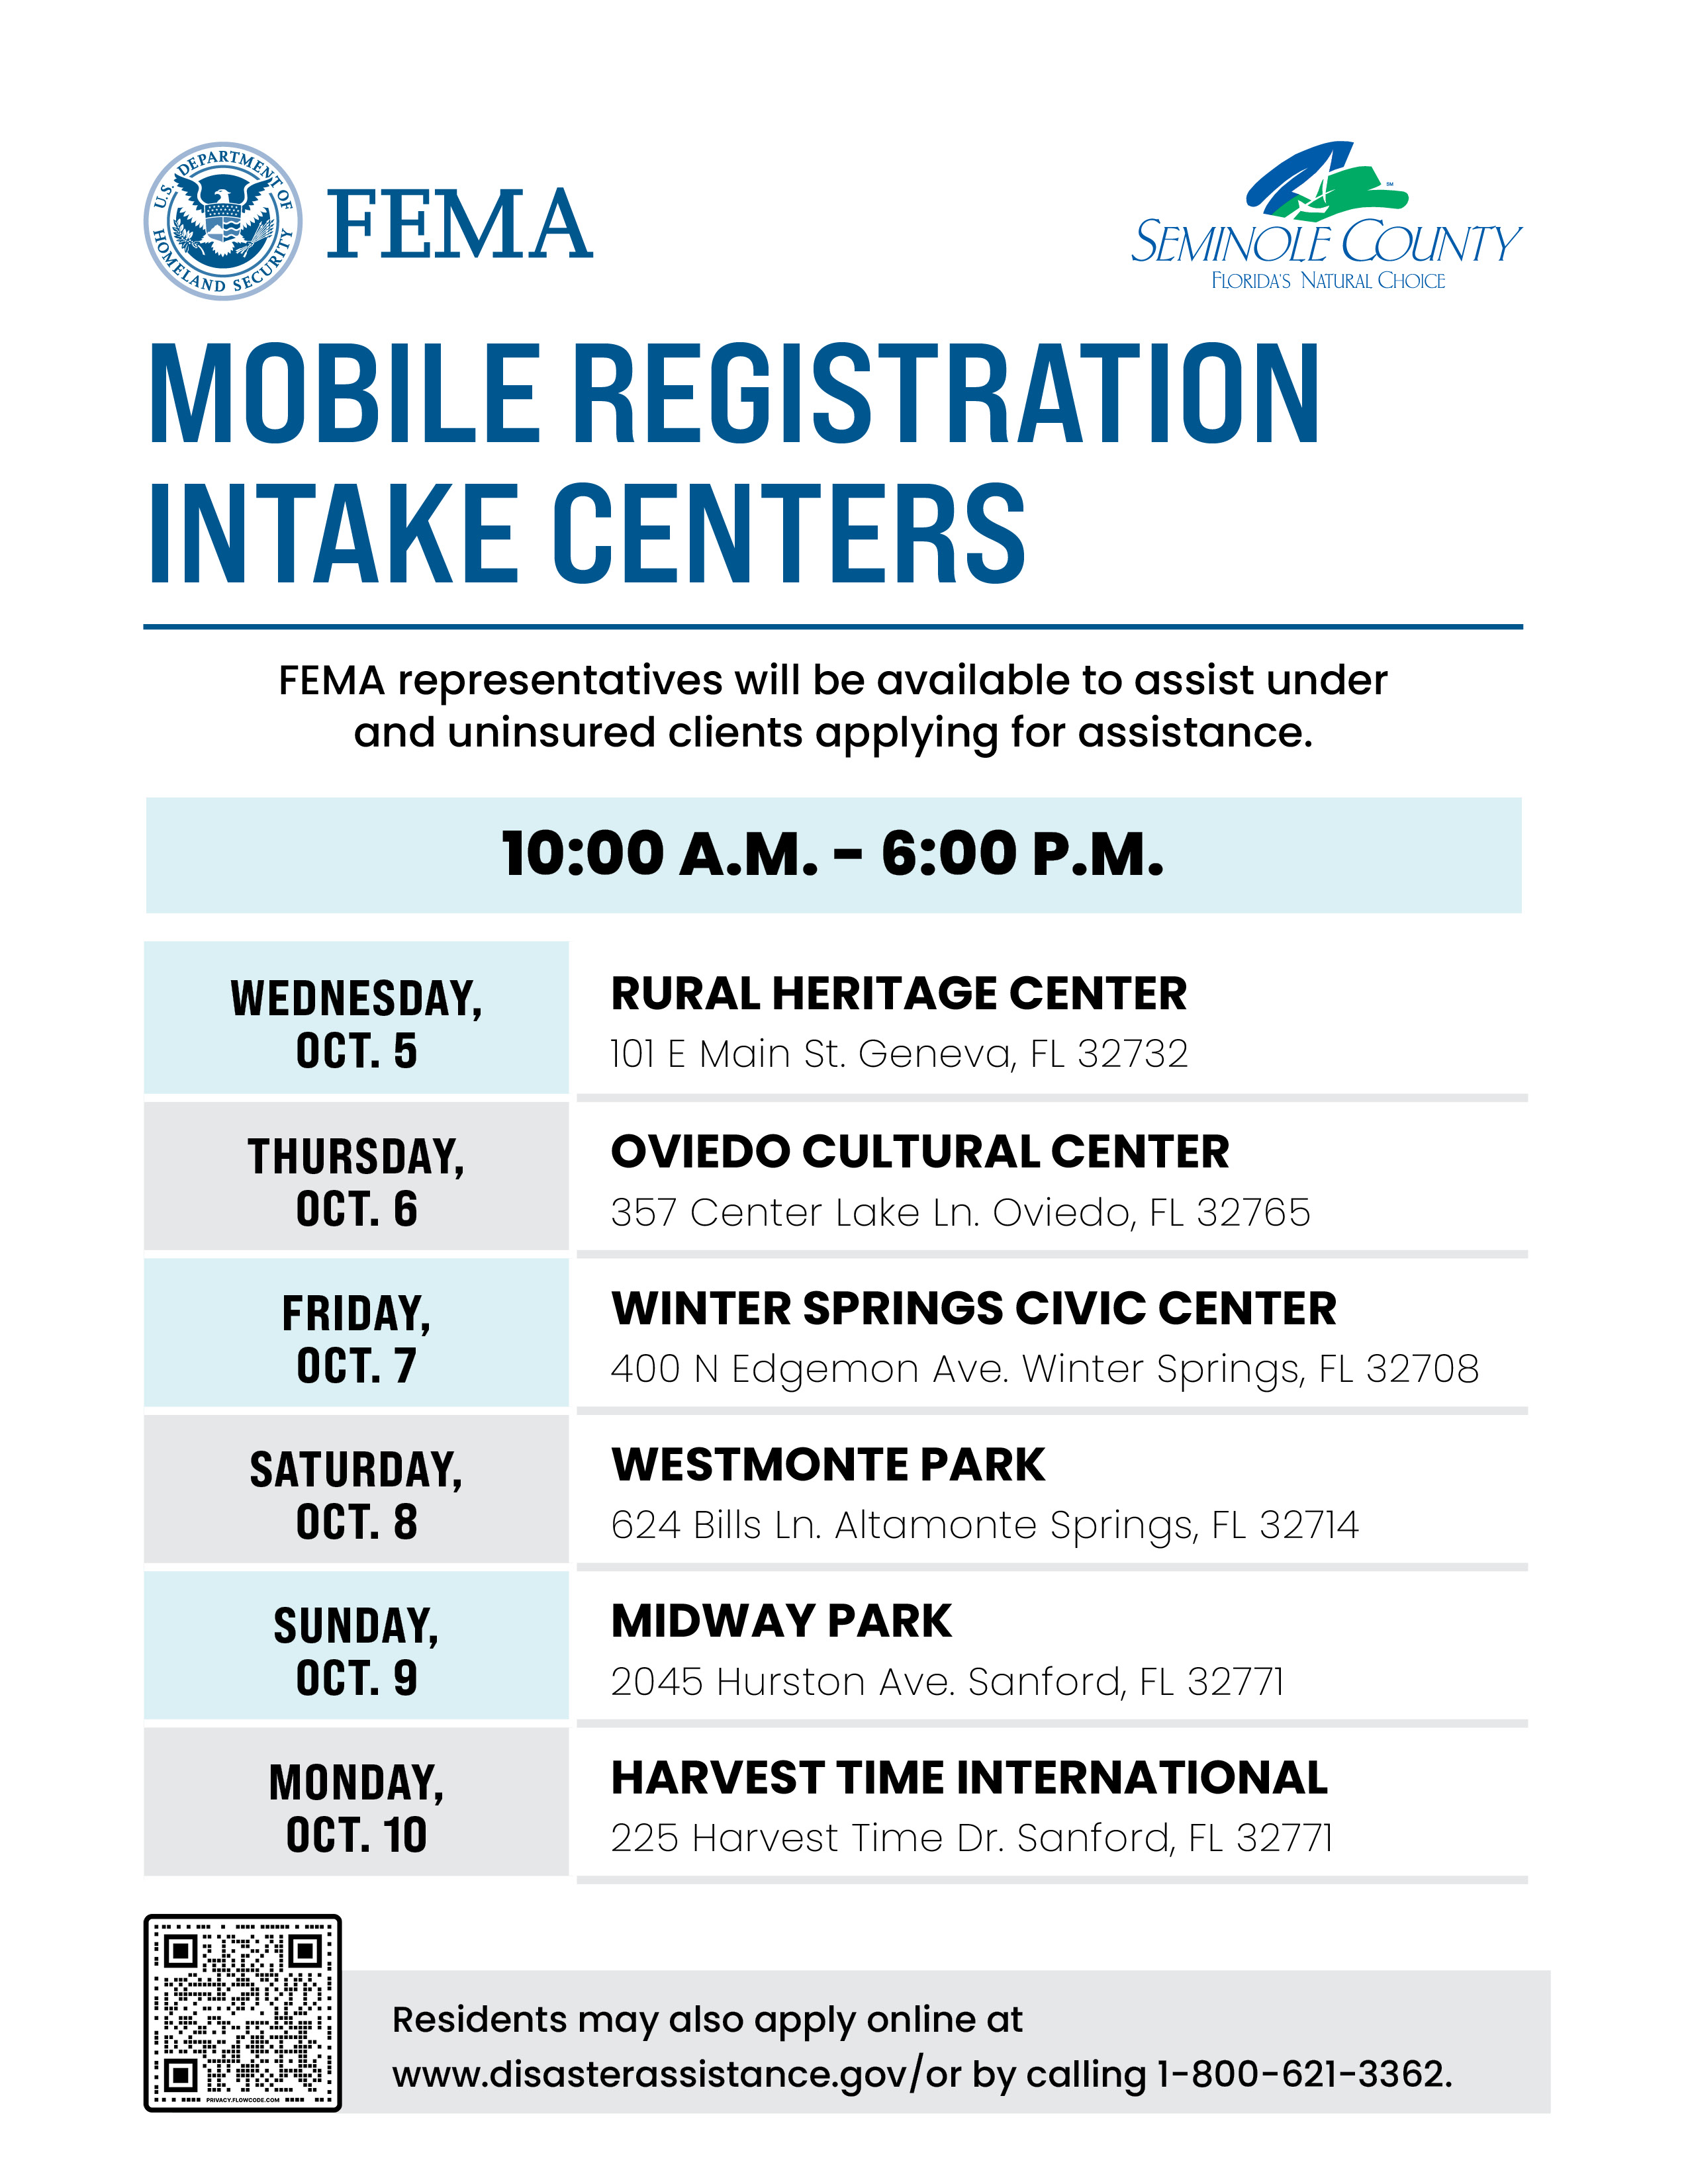 FEMA mobile registration intake centers